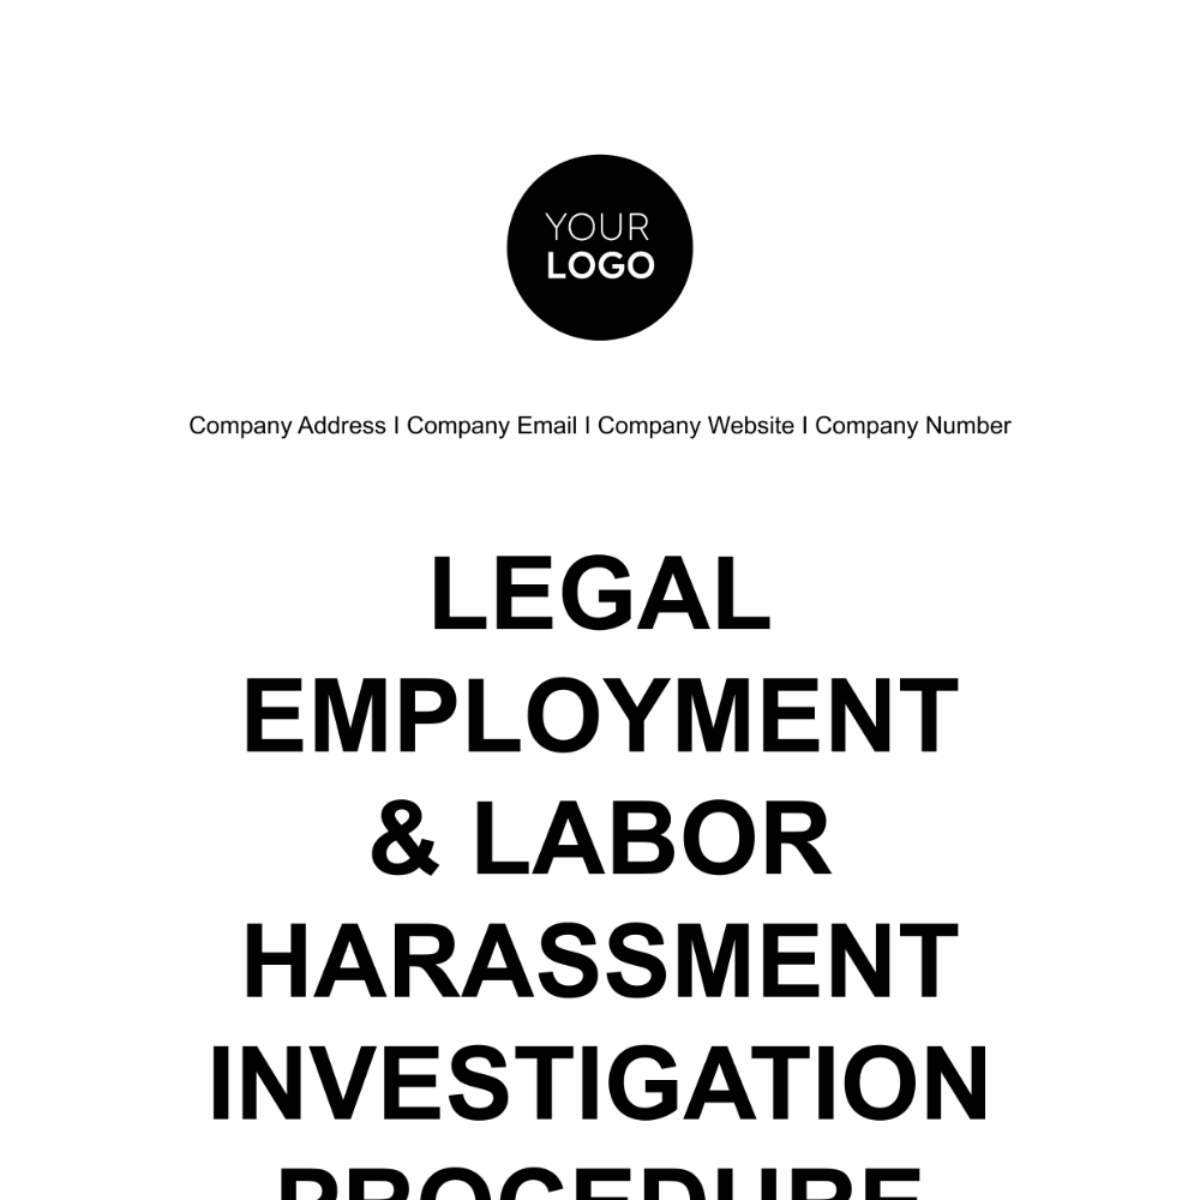 Free Legal Employment & Labor Harassment Investigation Procedure Template